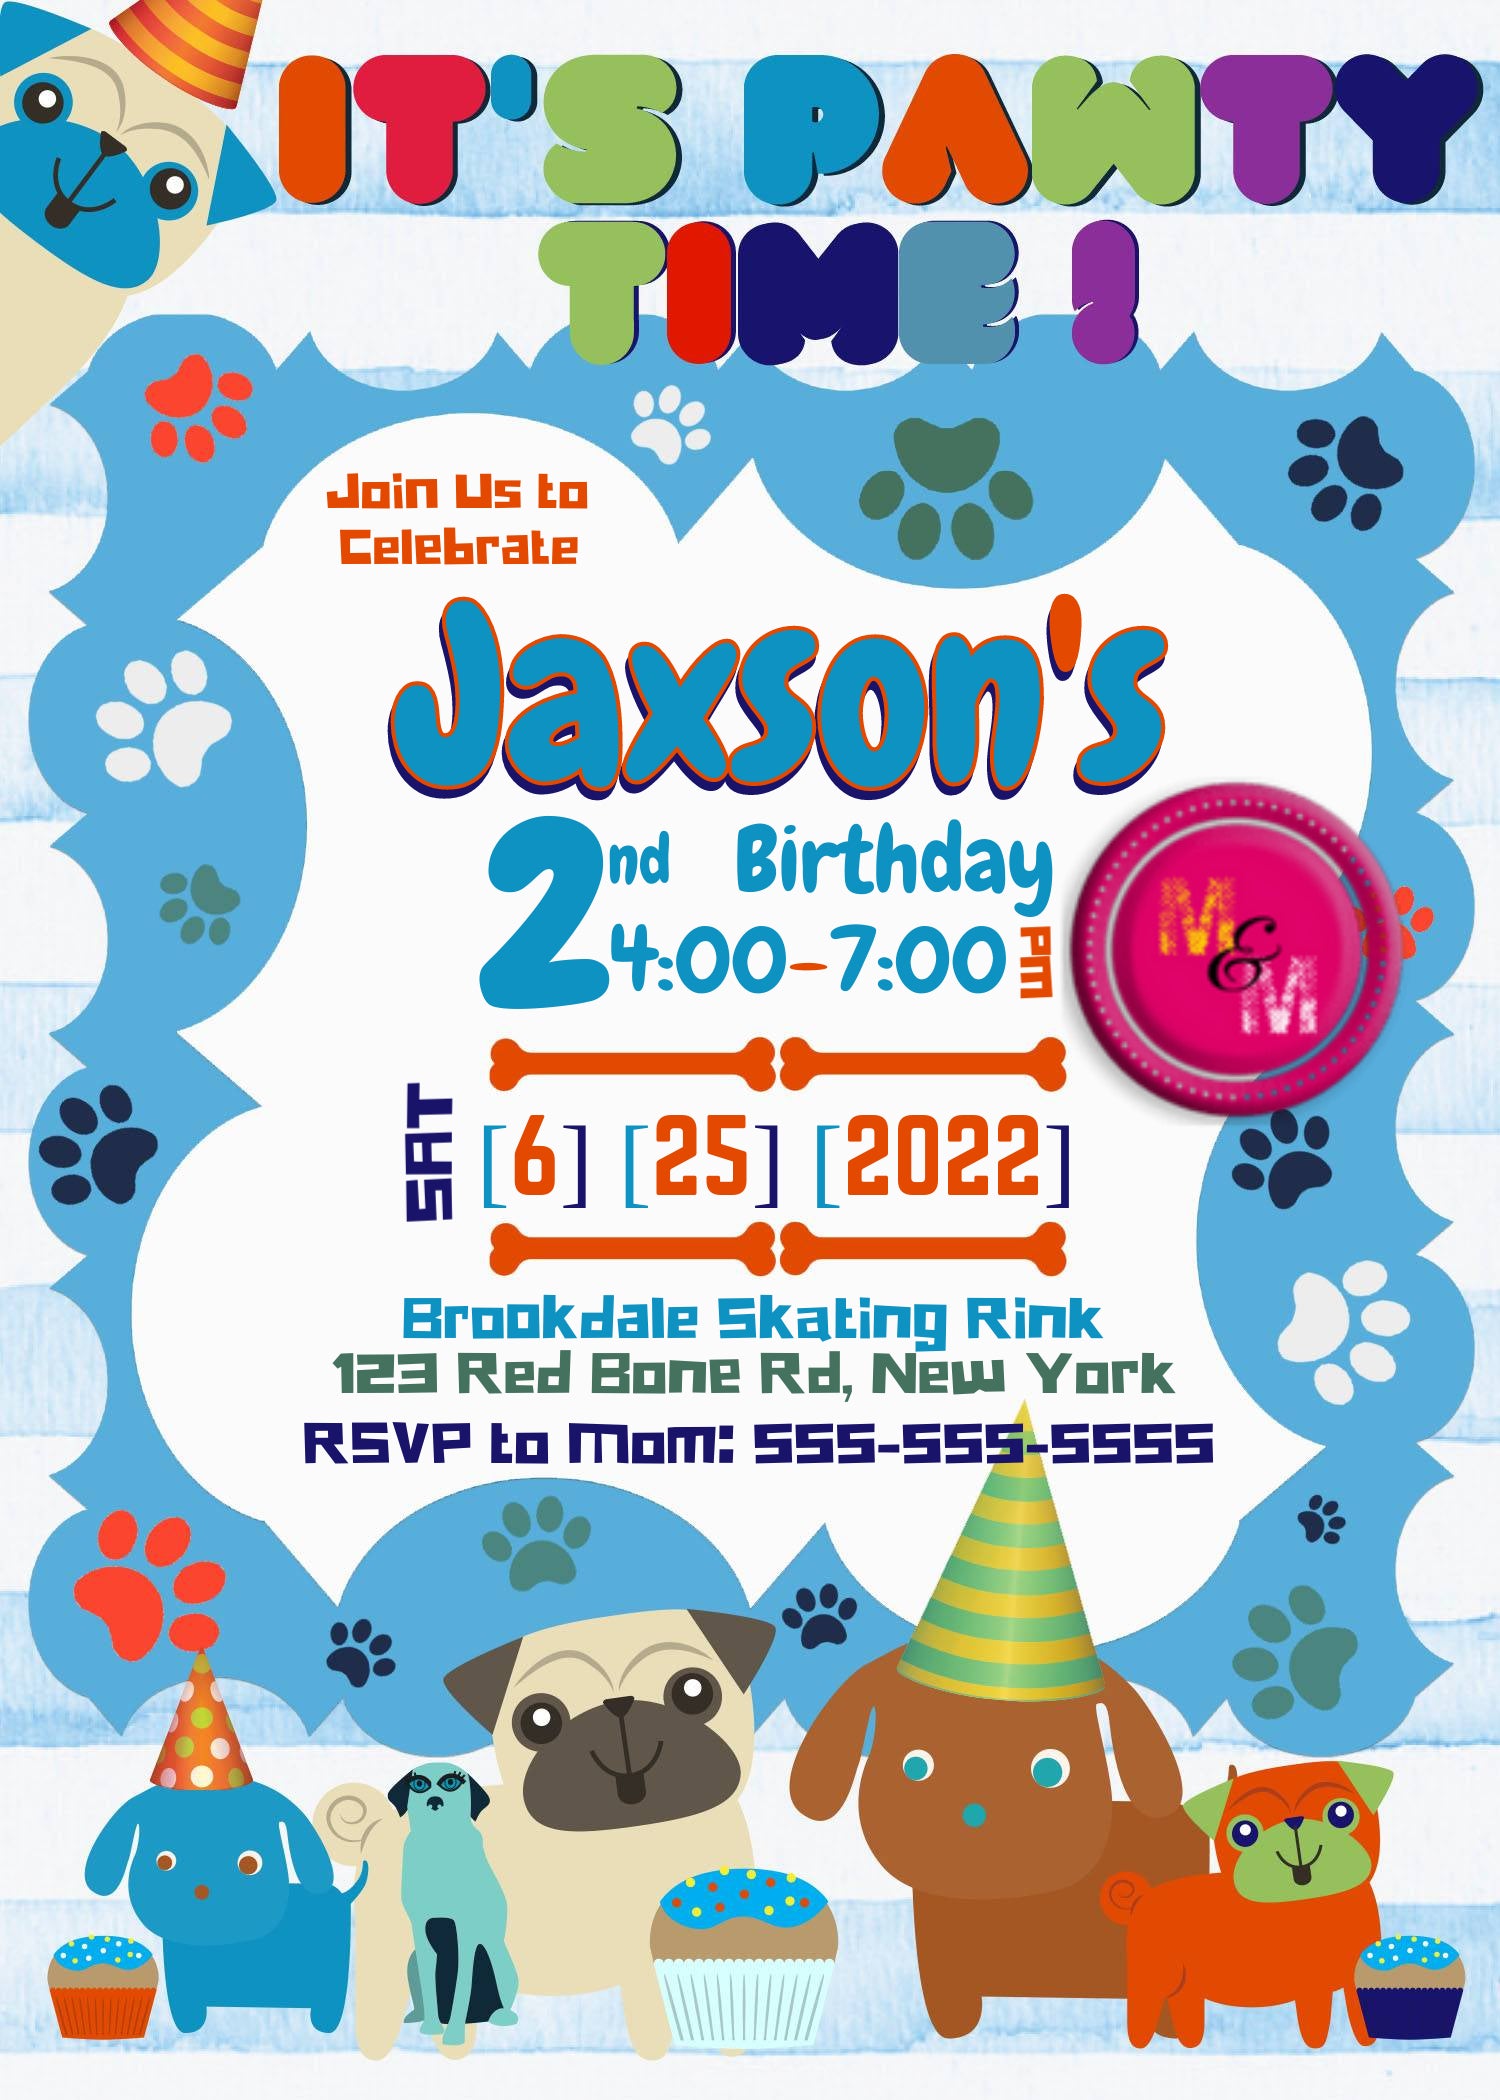 Editable Pawty Time  Blue Cute Puppy Dog Birthday Invitation, DIY Print, Puppy Invitation